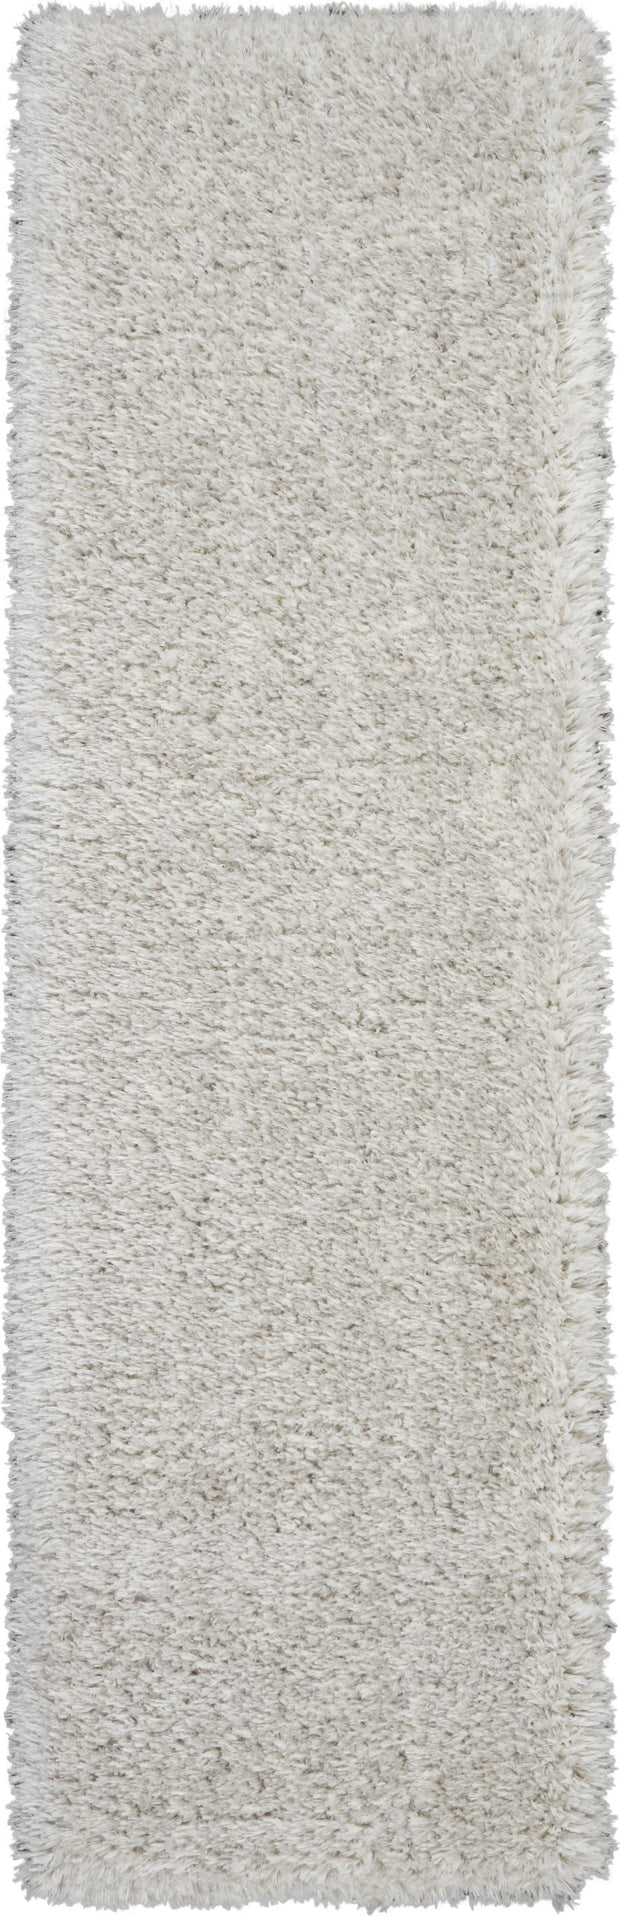 luxe shag light grey rug by nourison 99446459404 redo 2